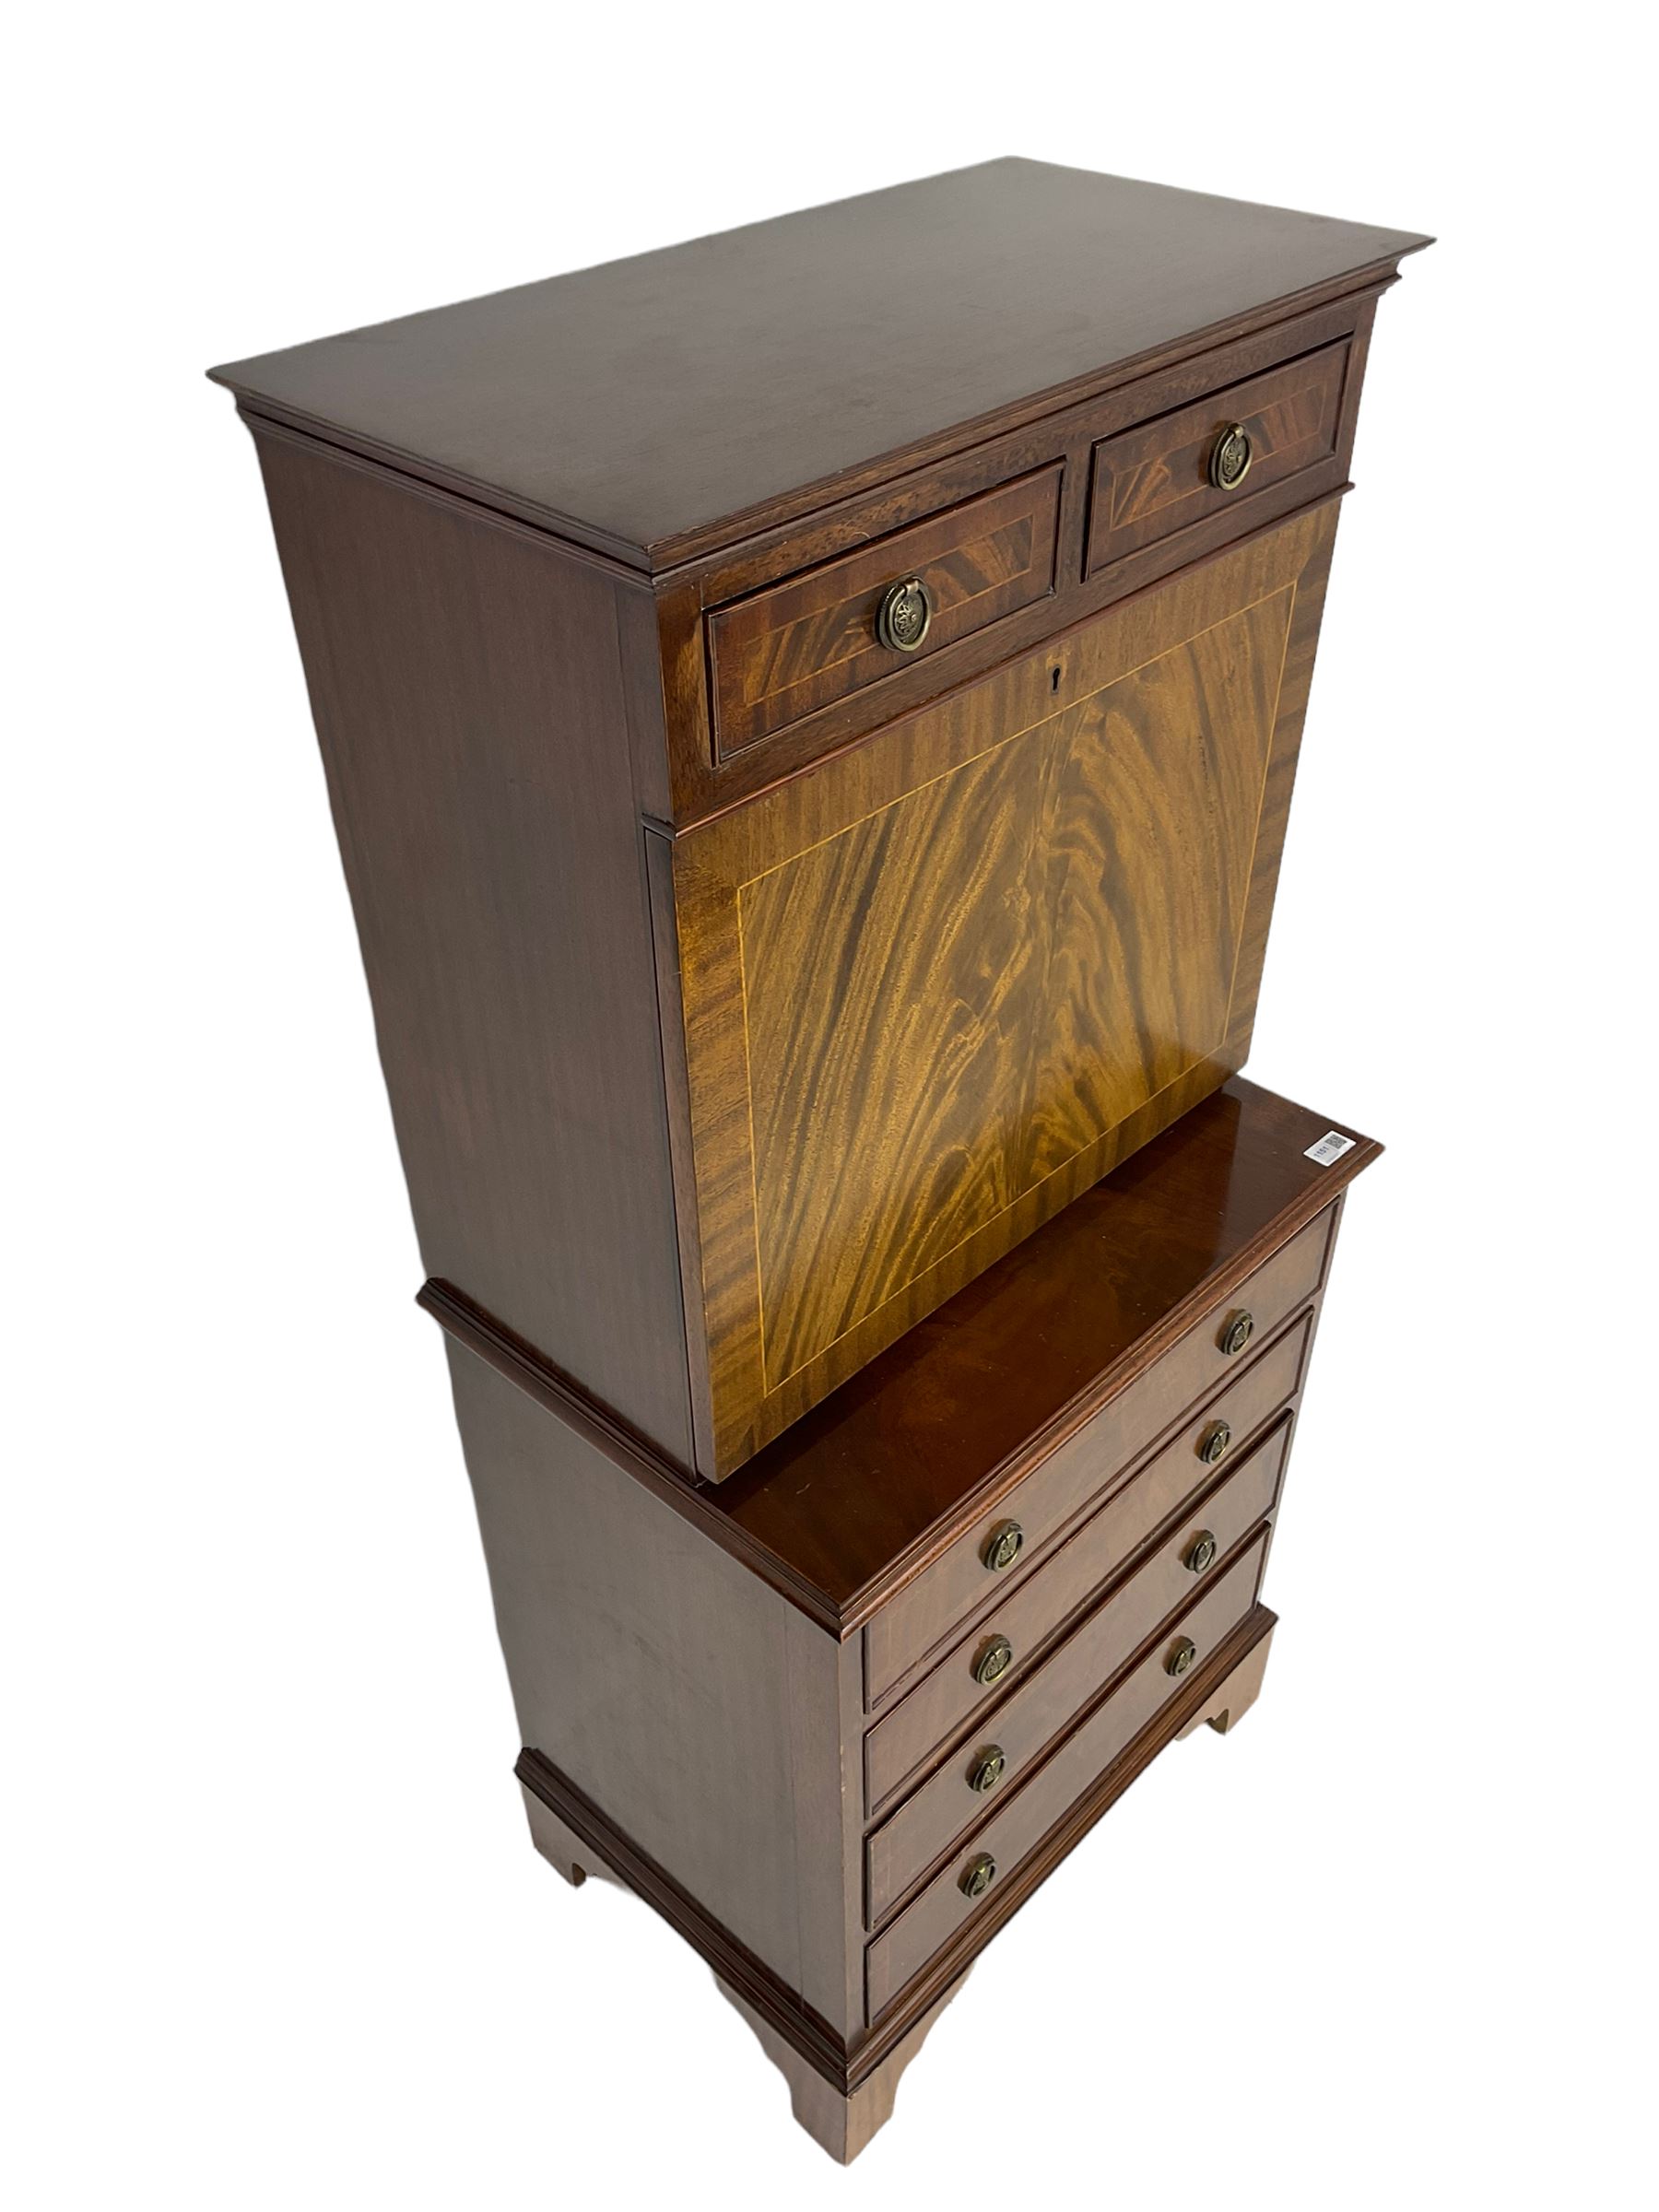 Shaw of London - mahogany secretaire chest - Image 3 of 8